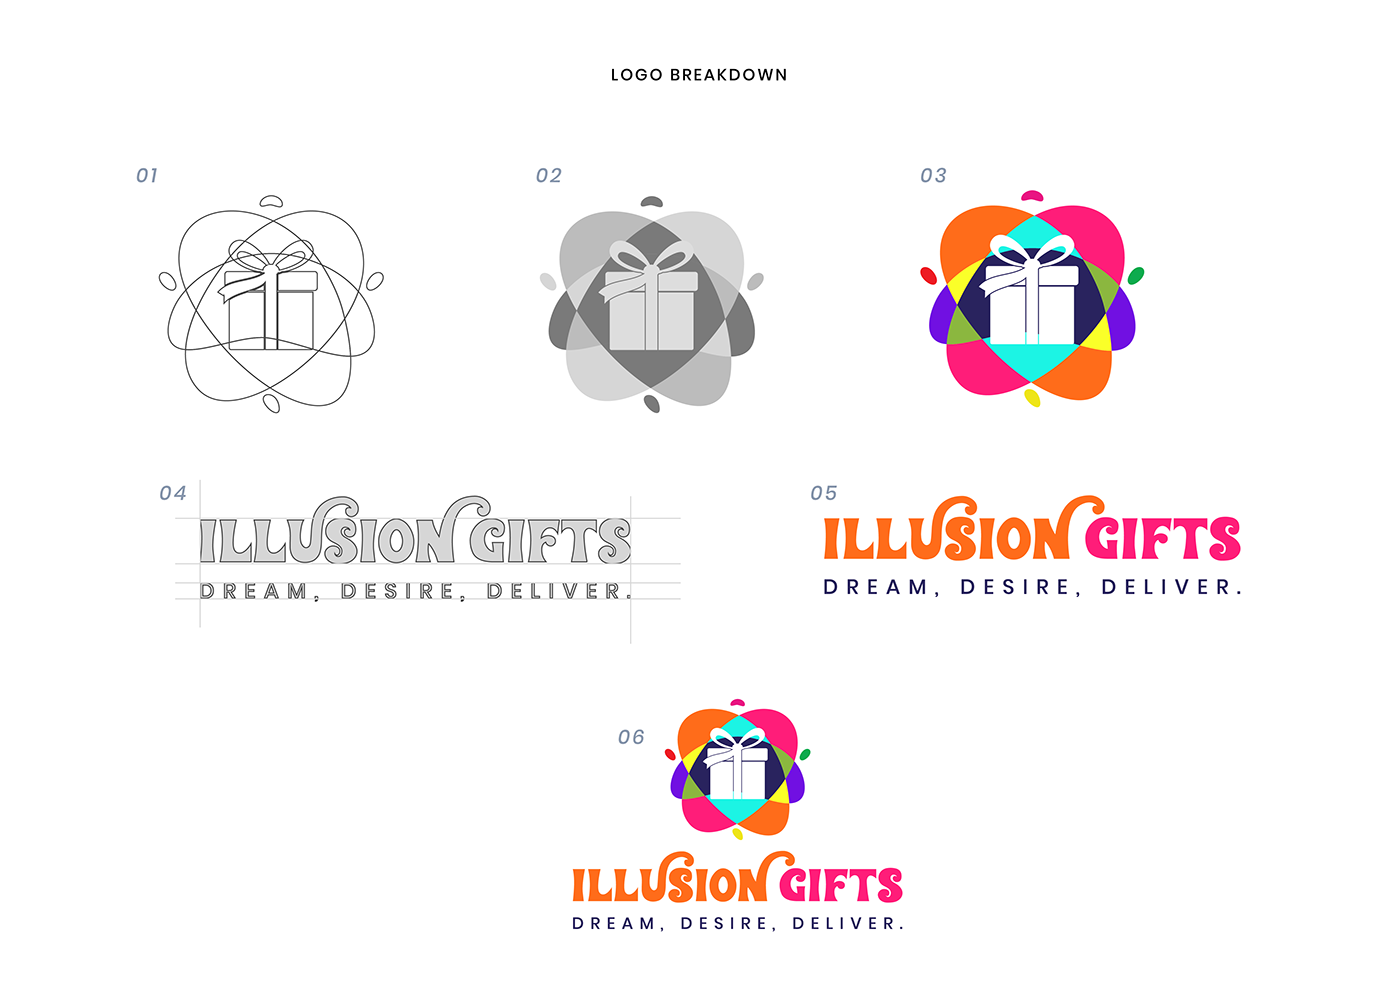 Creative Illusion Gifts brand identity #gifts #branding #logoidentity #brandguidance
#logodesign #ui